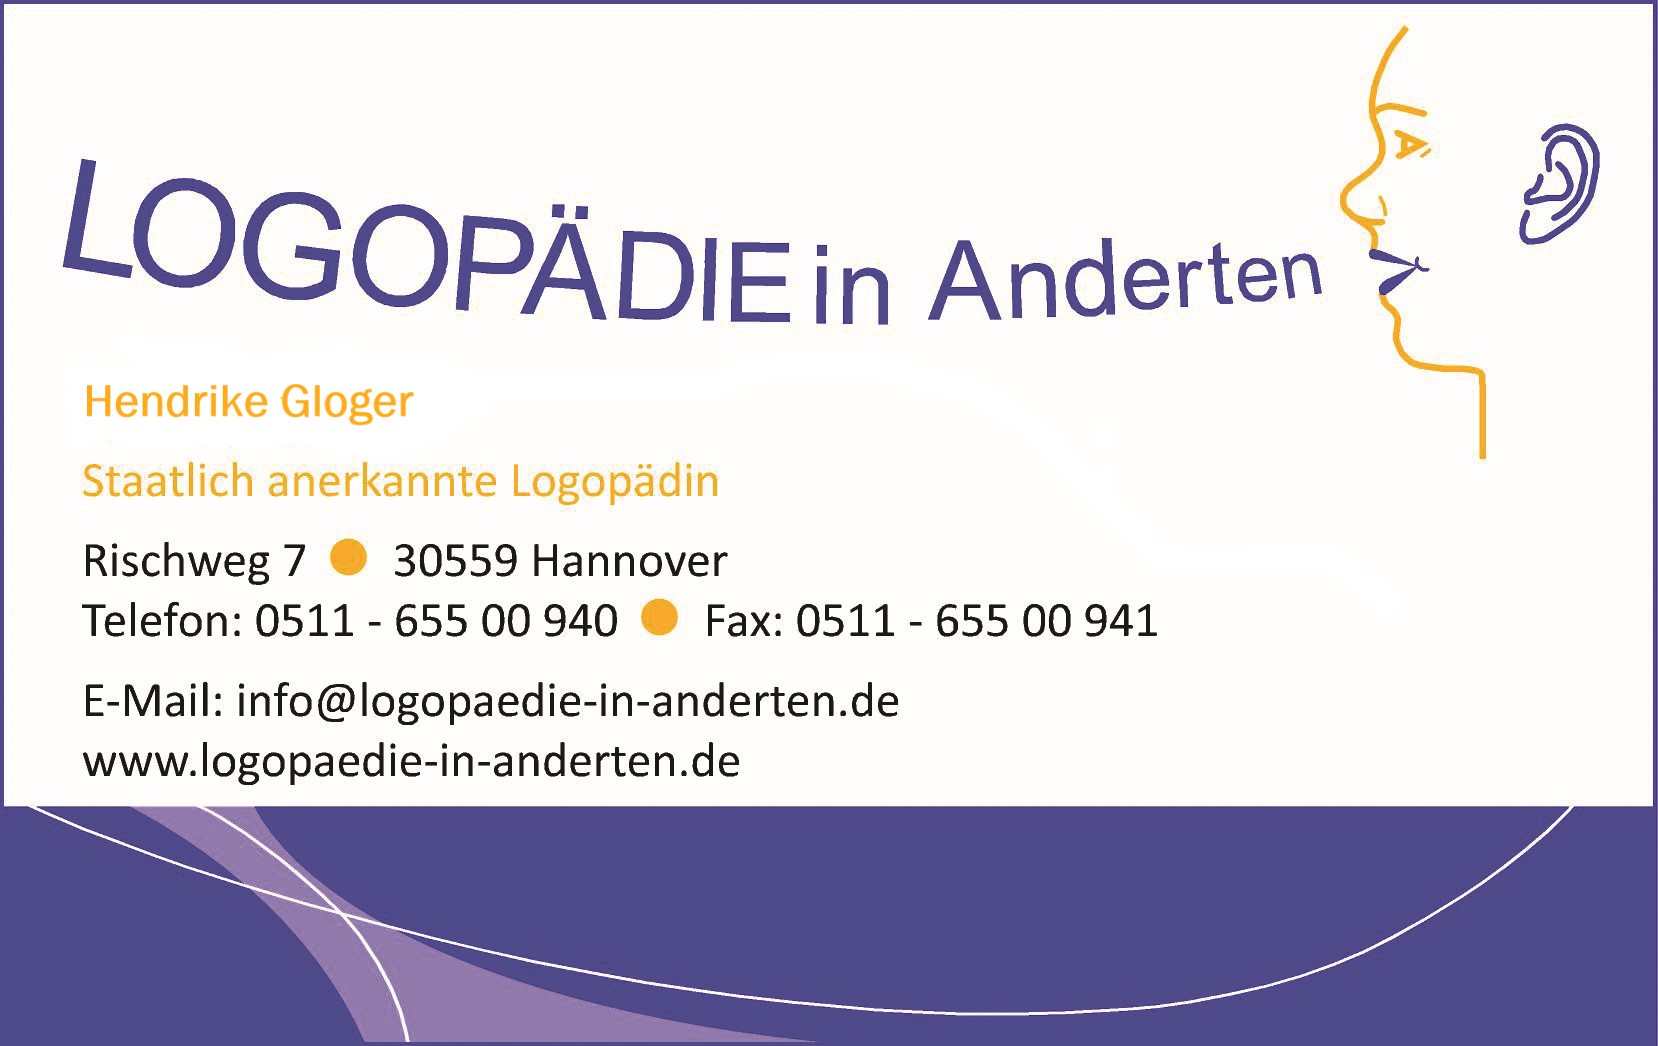 Fotos - Logopädie in Anderten - 2